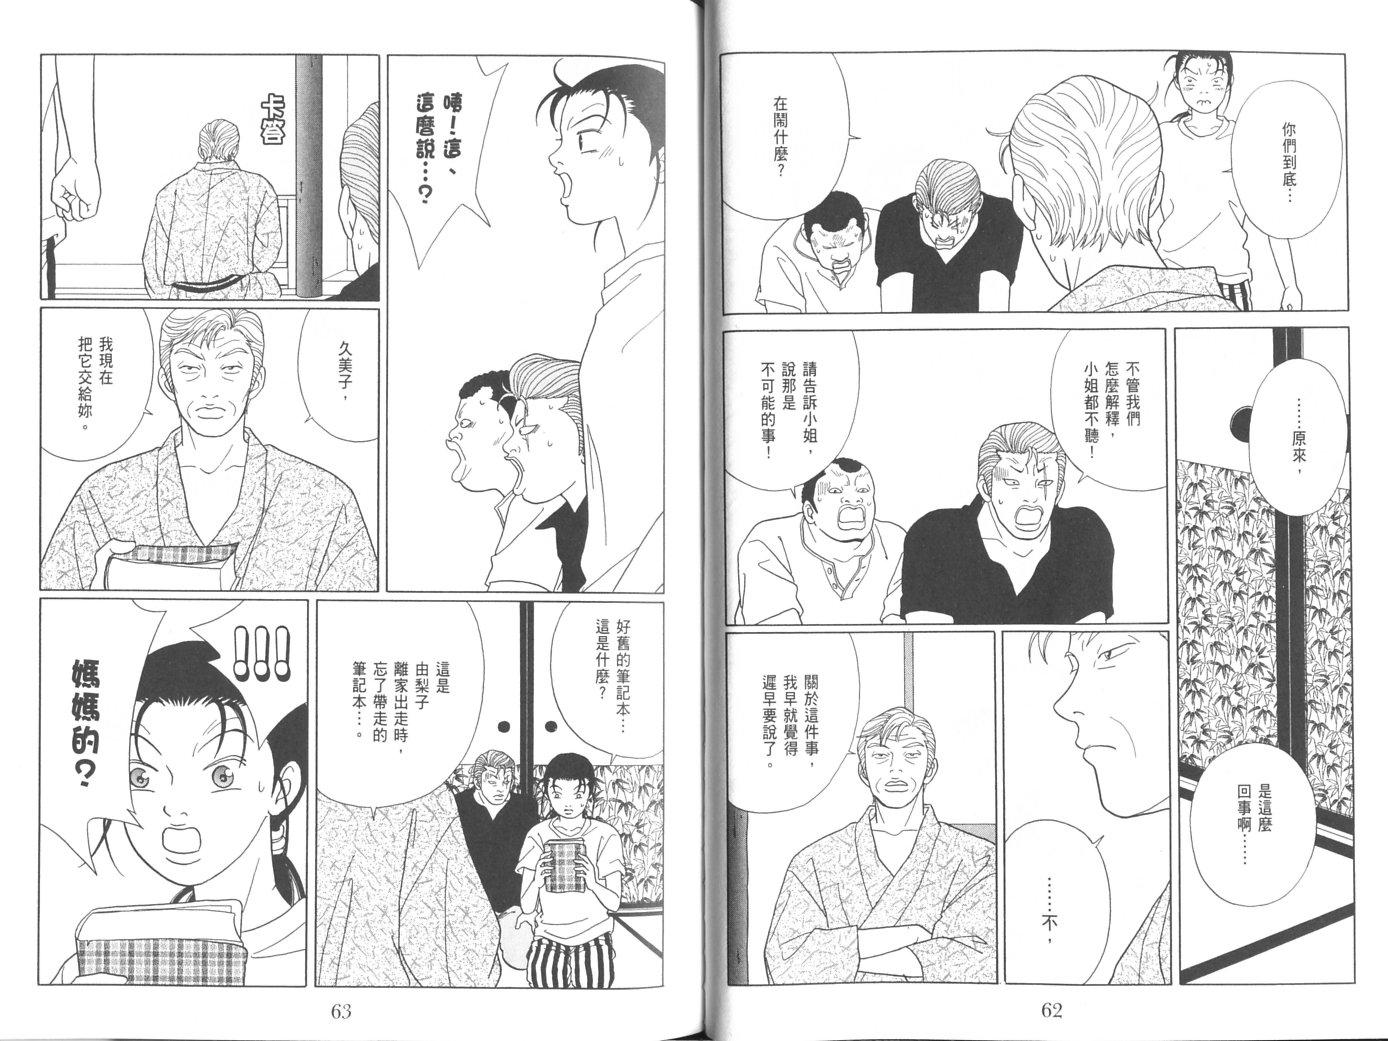 billwang_comic_4261241-Gokusen_08_037-embed.jpg